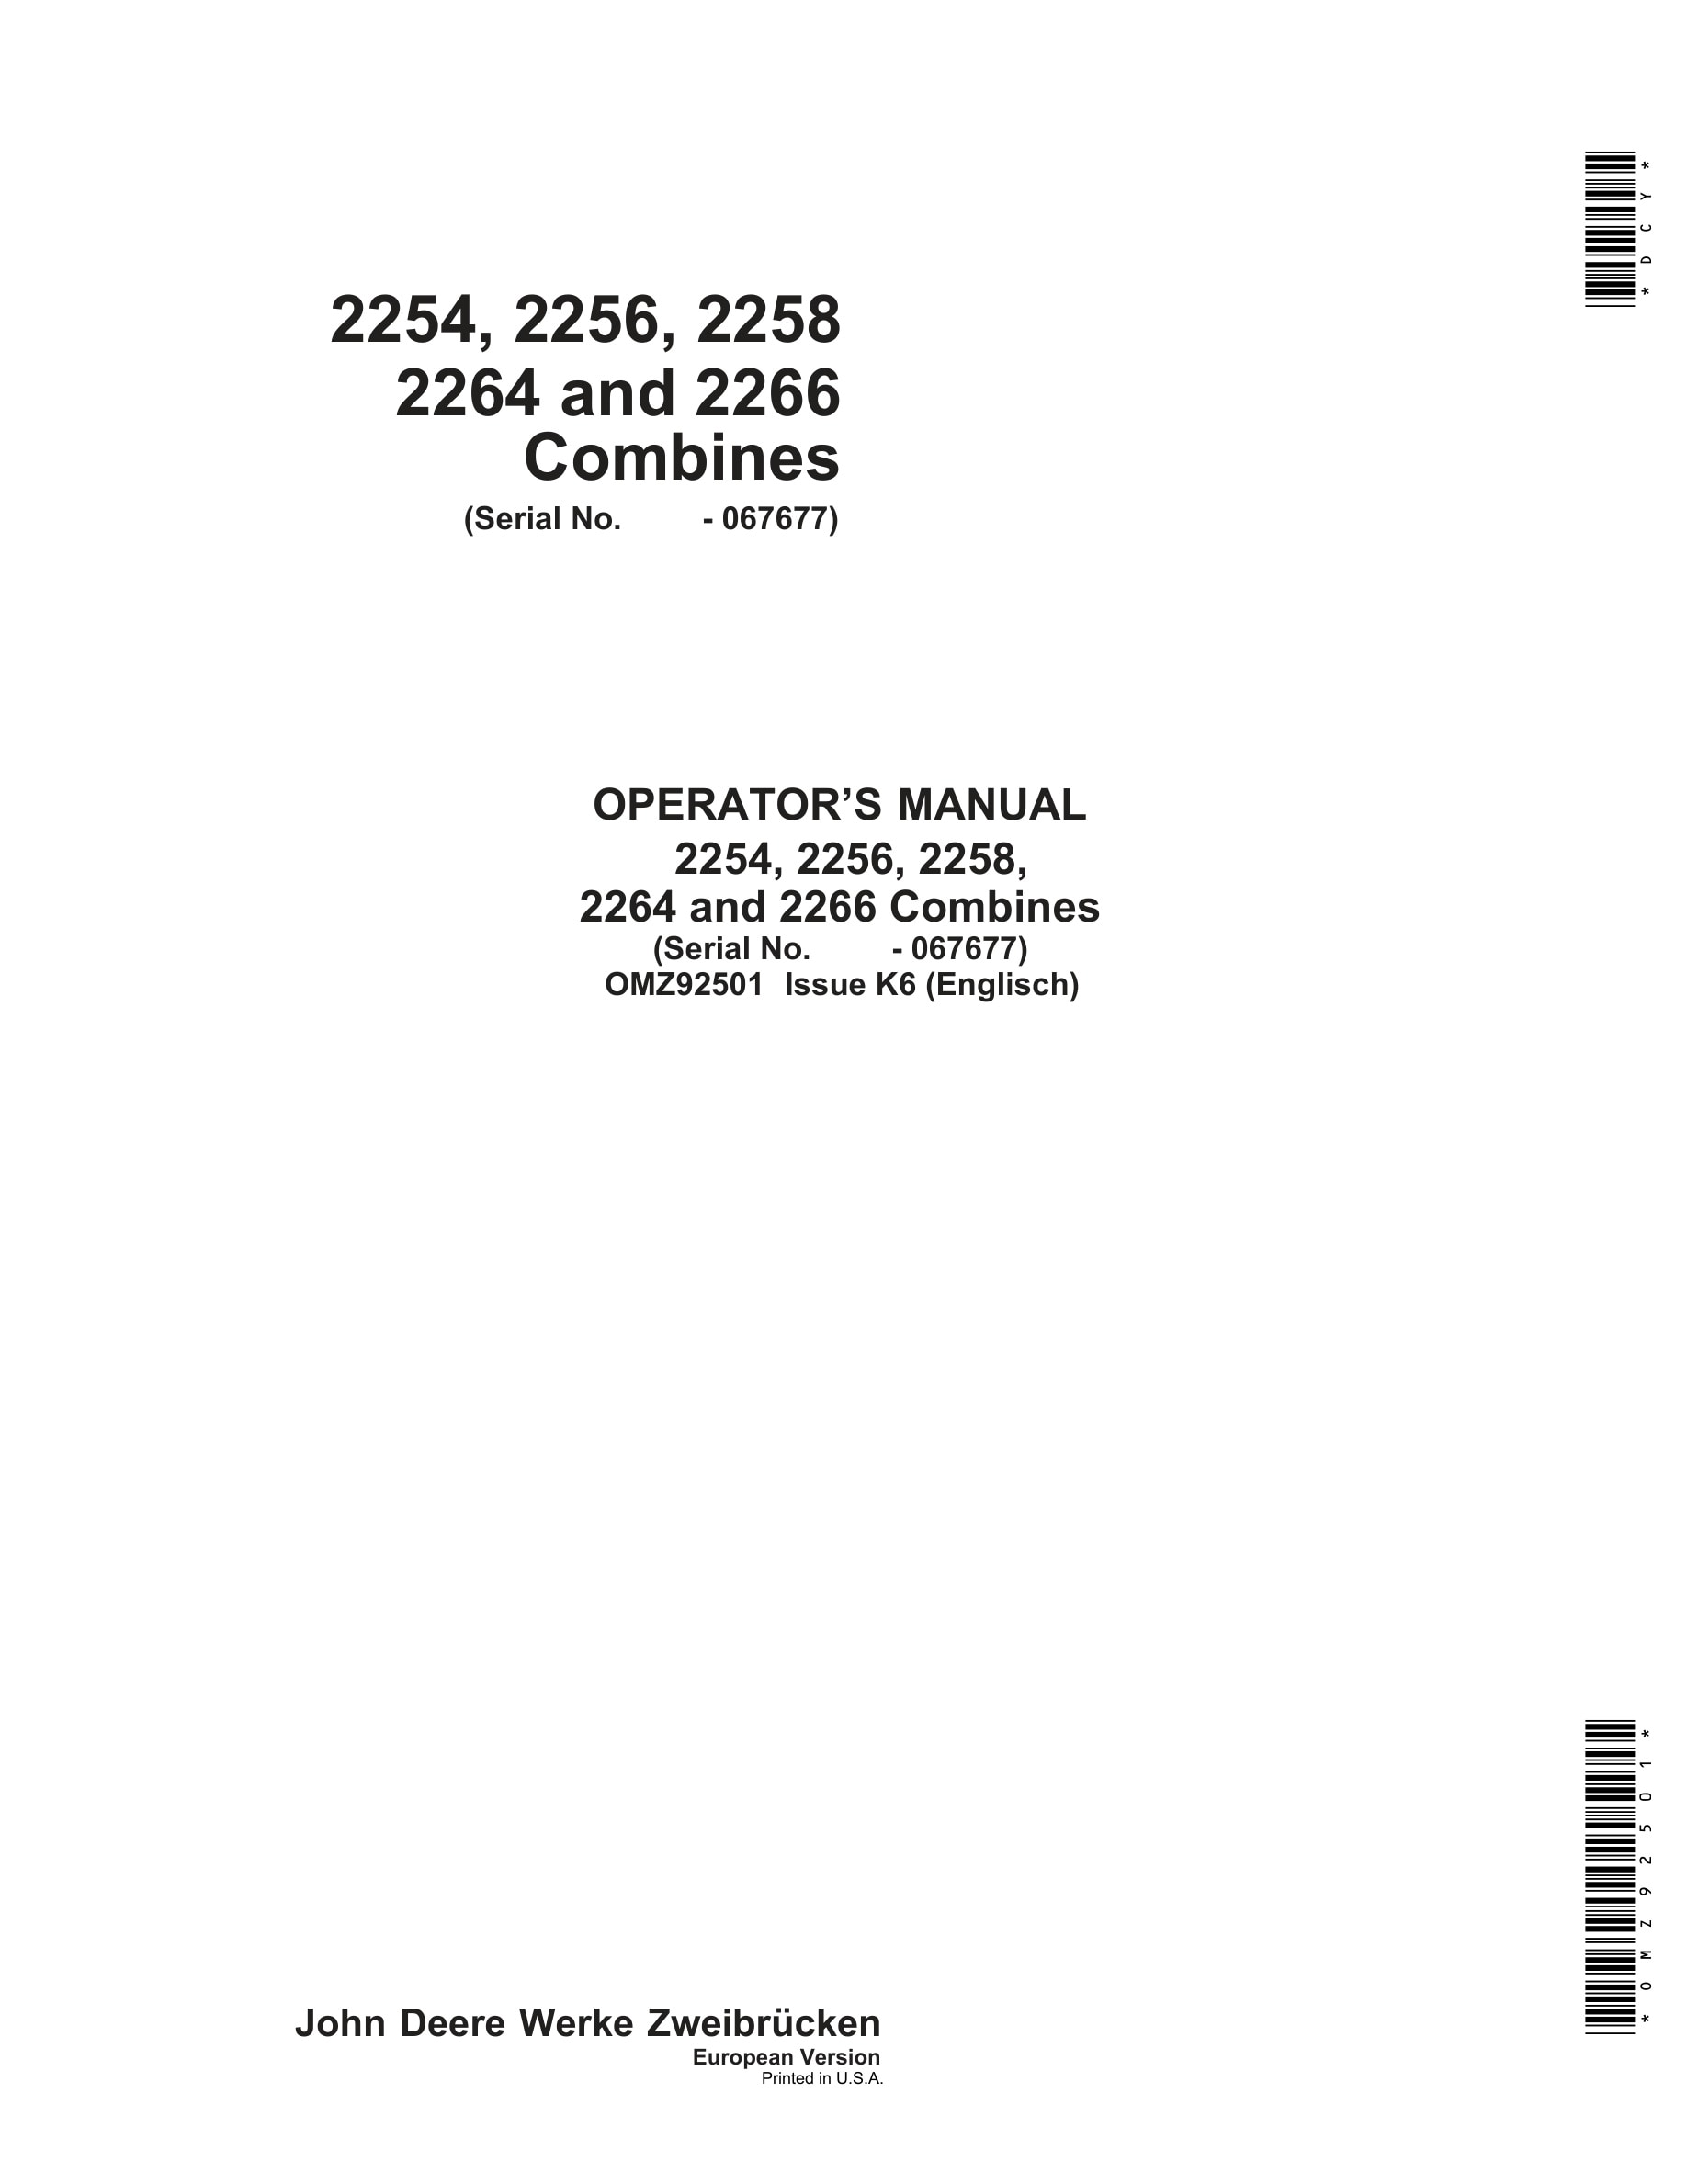 John Deere 2254, 2256, 2258 2264 and 2266 Combine Operator Manual OMZ92501-1